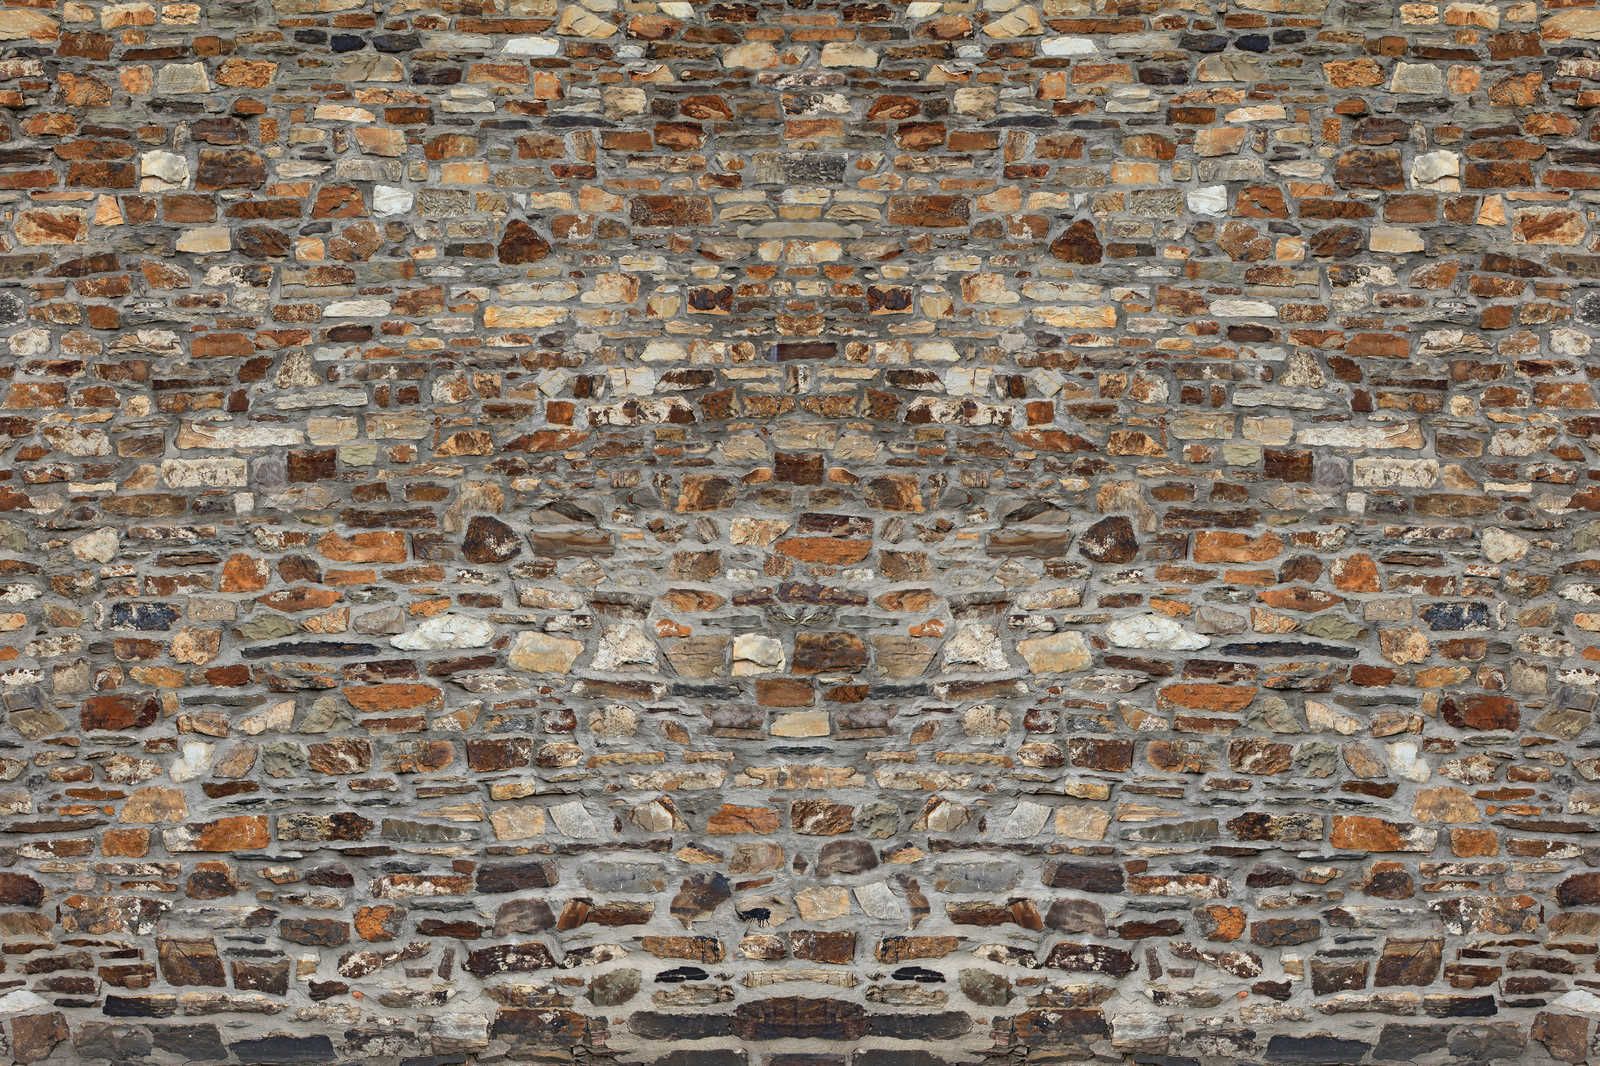             Leinwandbild 3D Mauer alte Ziegel & rustikaler Steinoptik – 0,90 m x 0,60 m
        